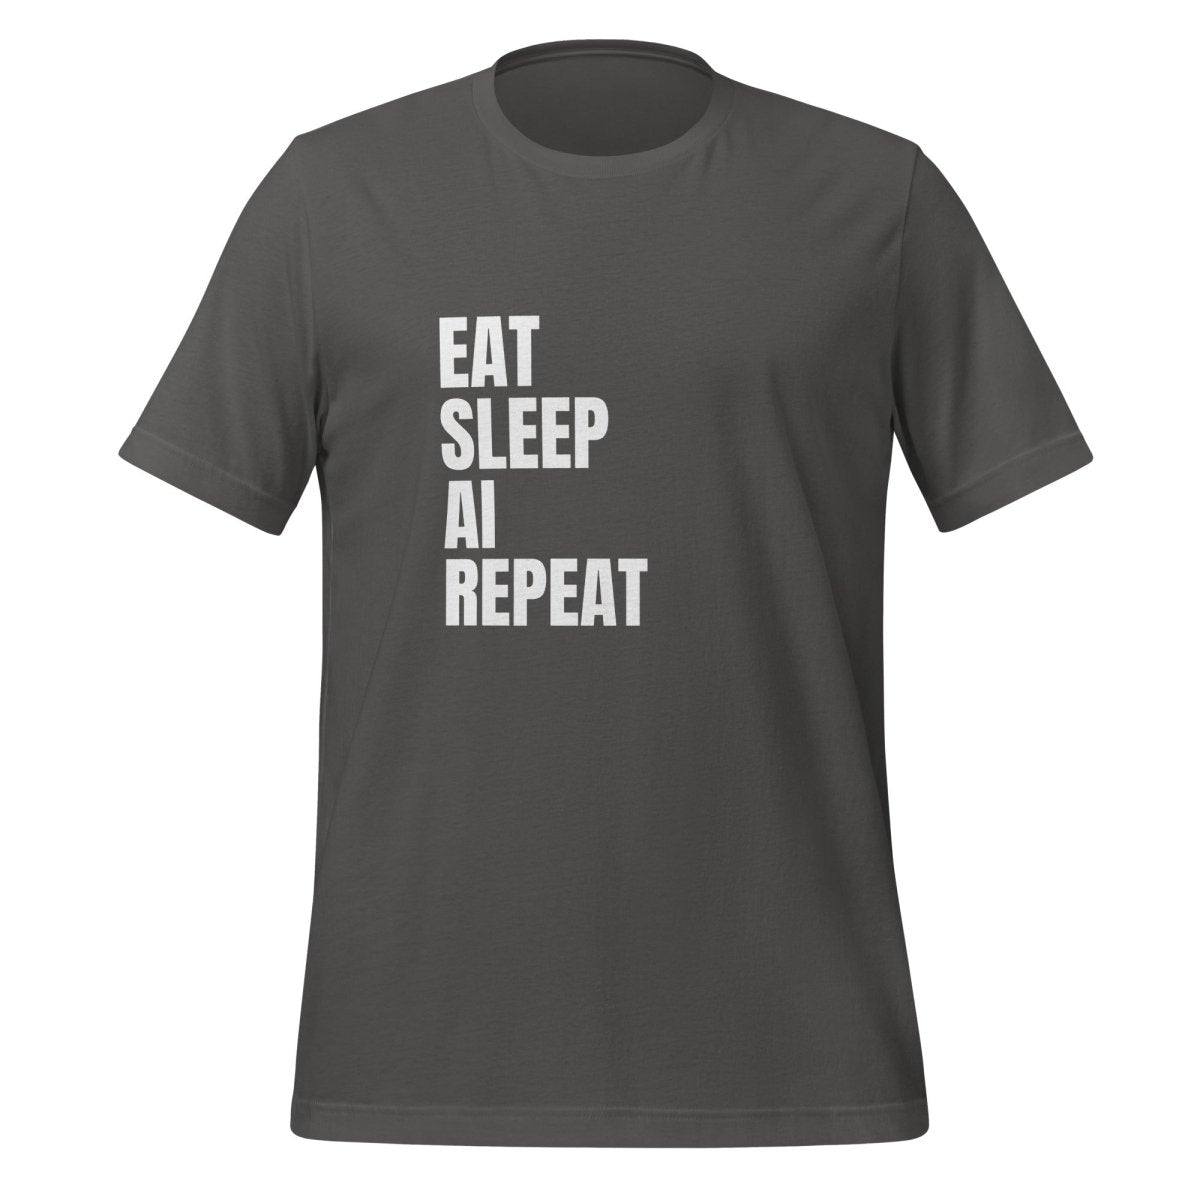 EAT SLEEP AI REPEAT T - Shirt 1 (unisex) - Asphalt - AI Store